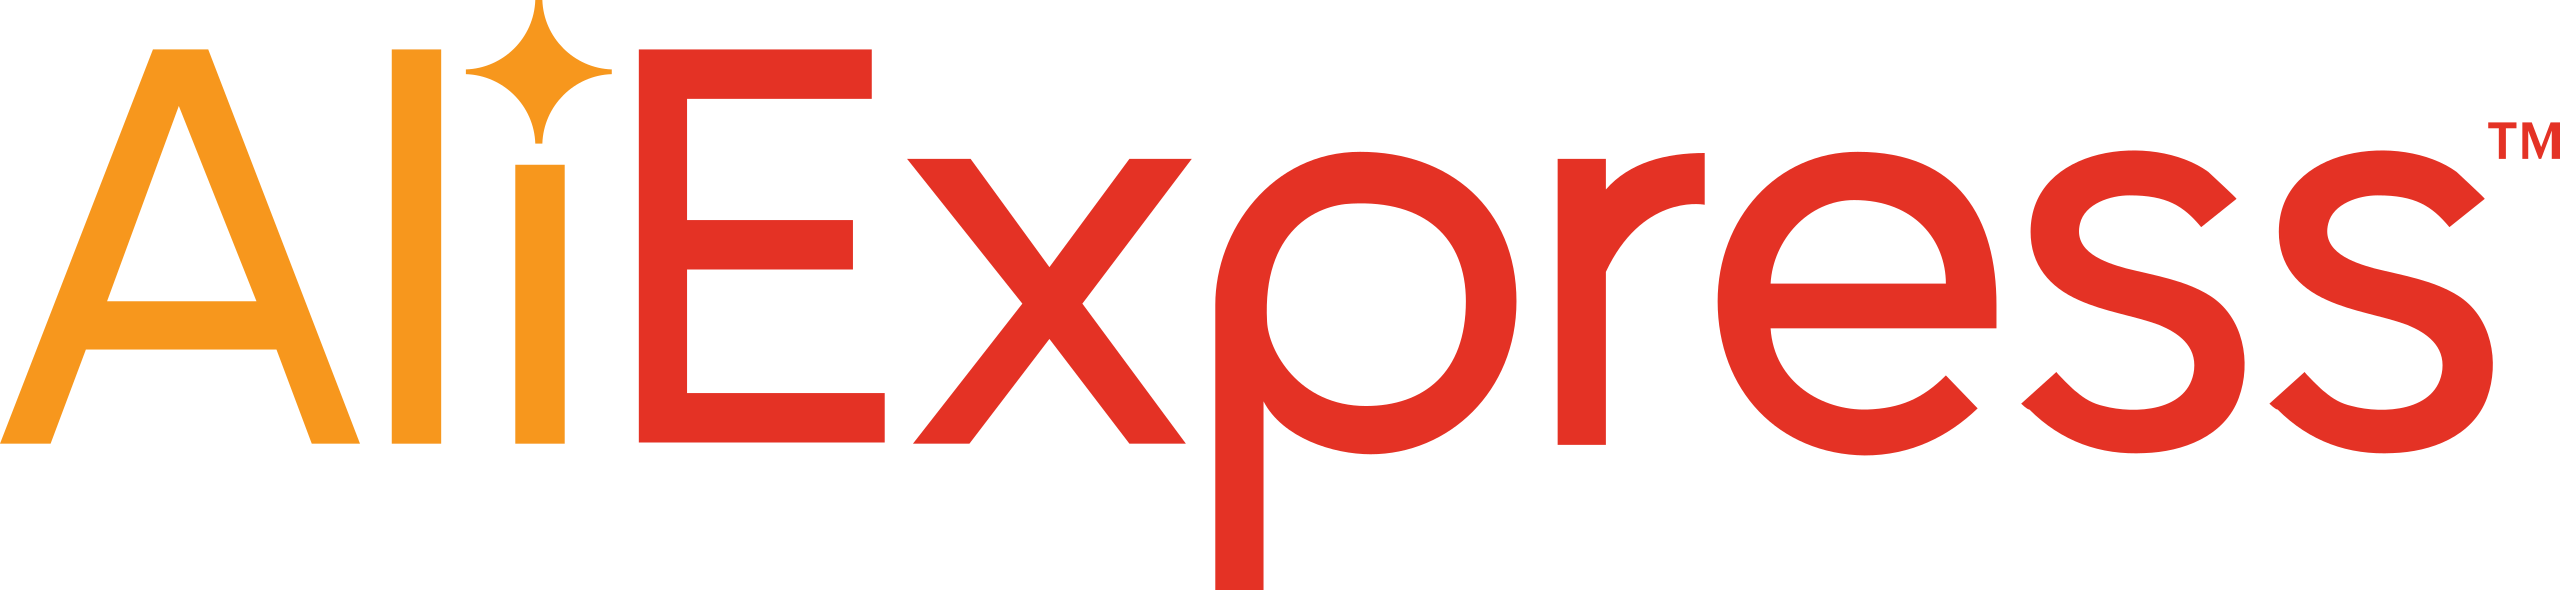 AliExpress ES logo